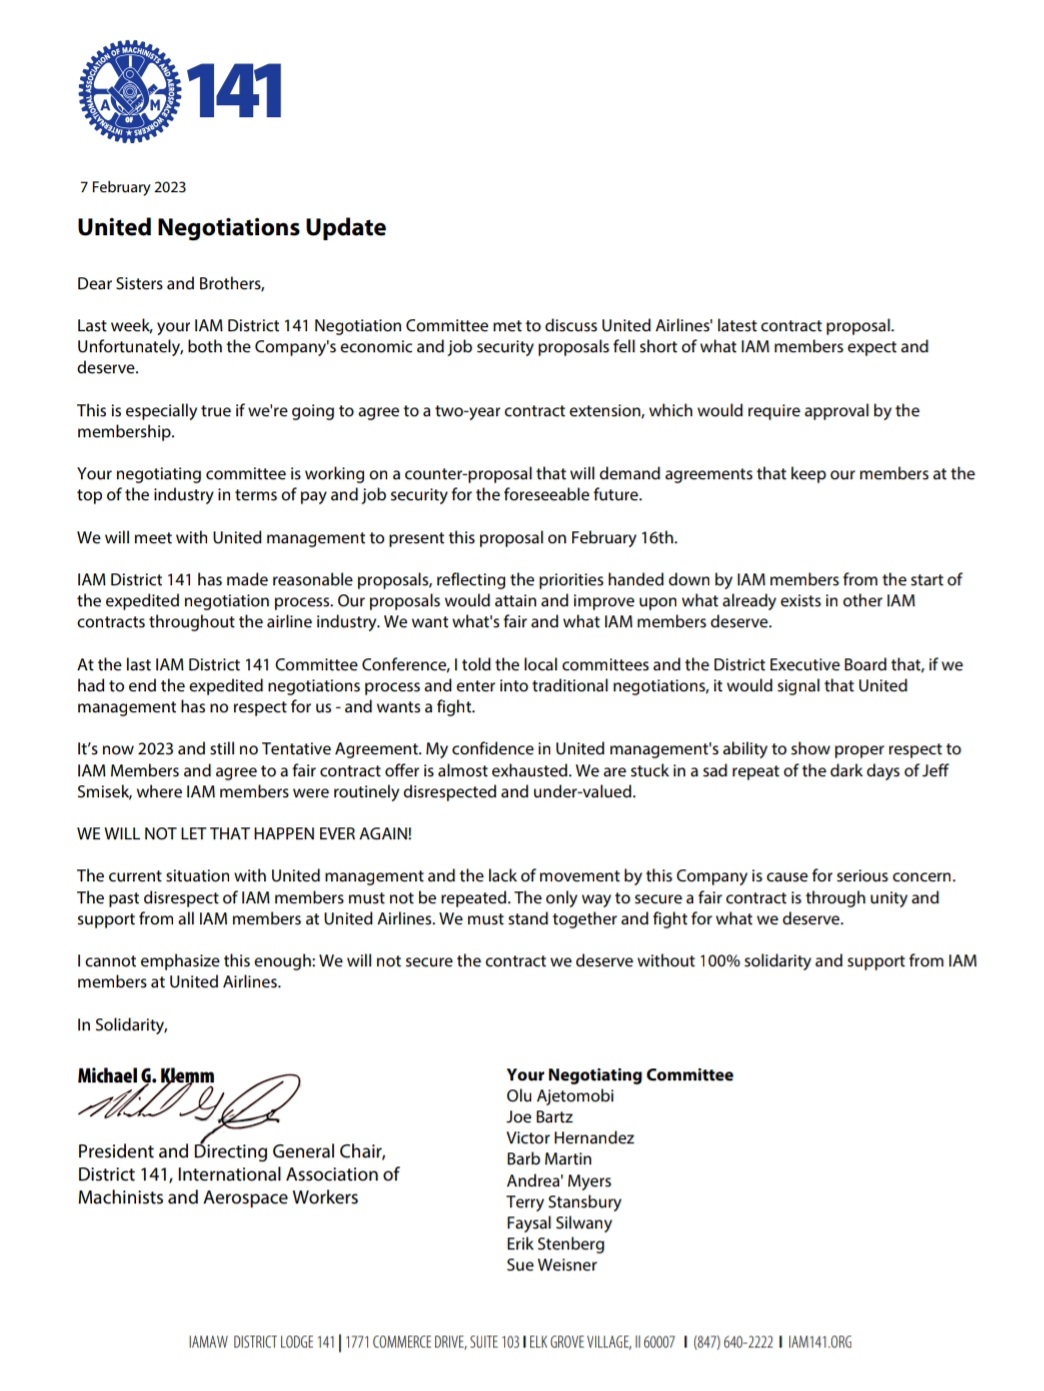 United Airlines Negotiations Update IAM Local Lodge 1731